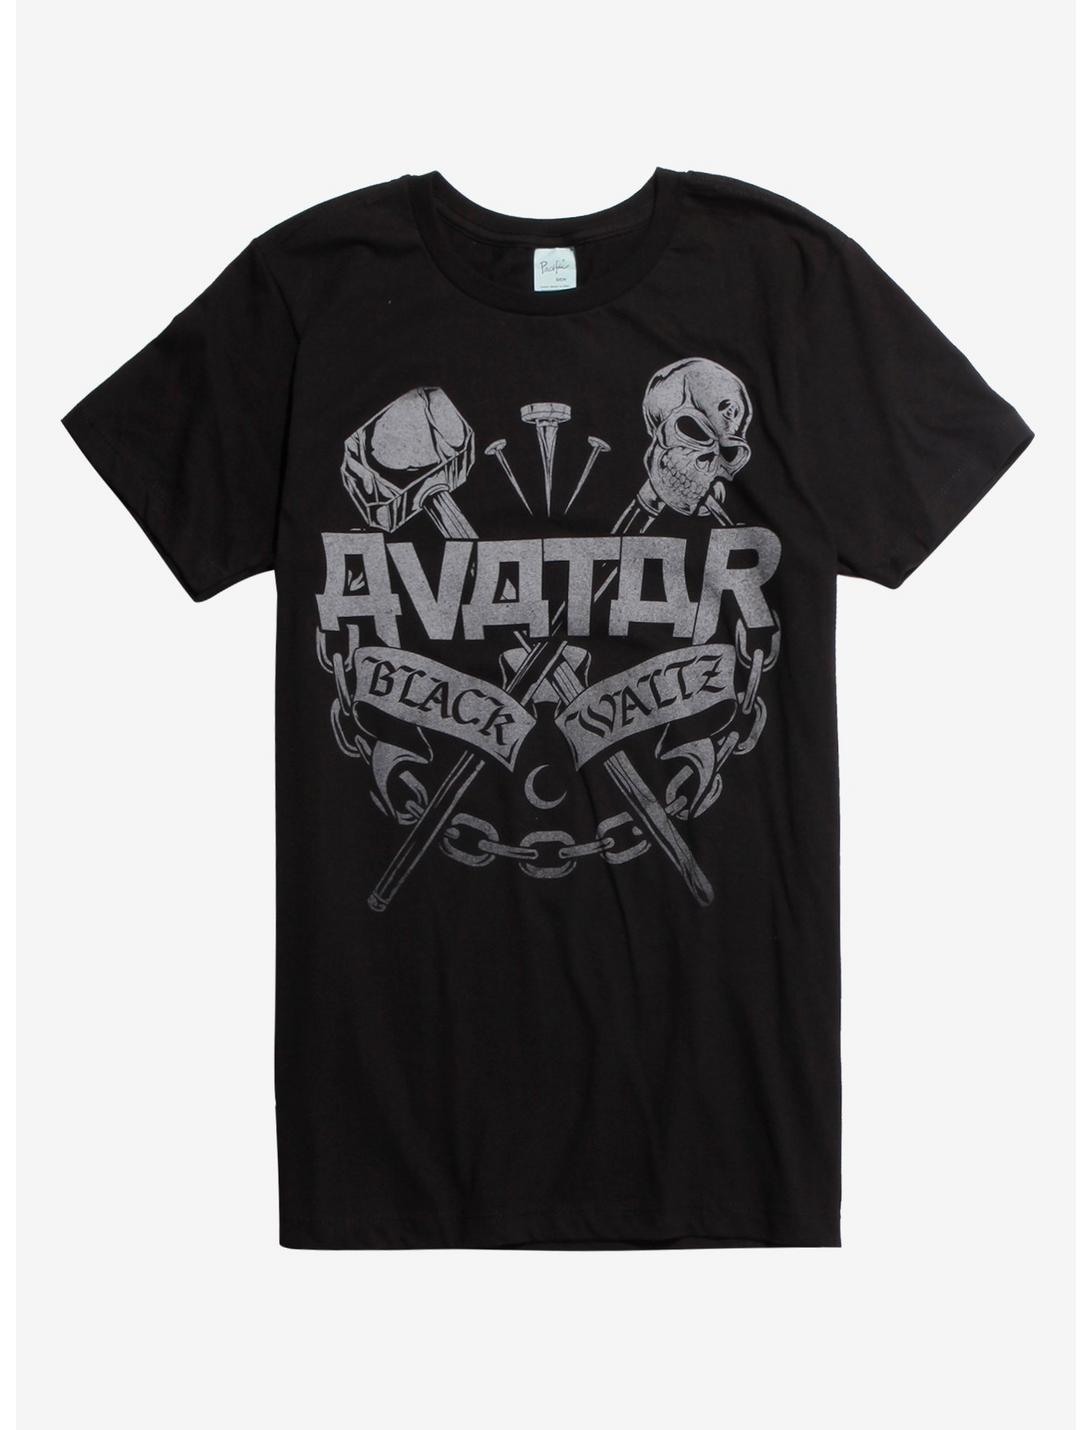 Avatar Black Waltz T-Shirt, BLACK, hi-res